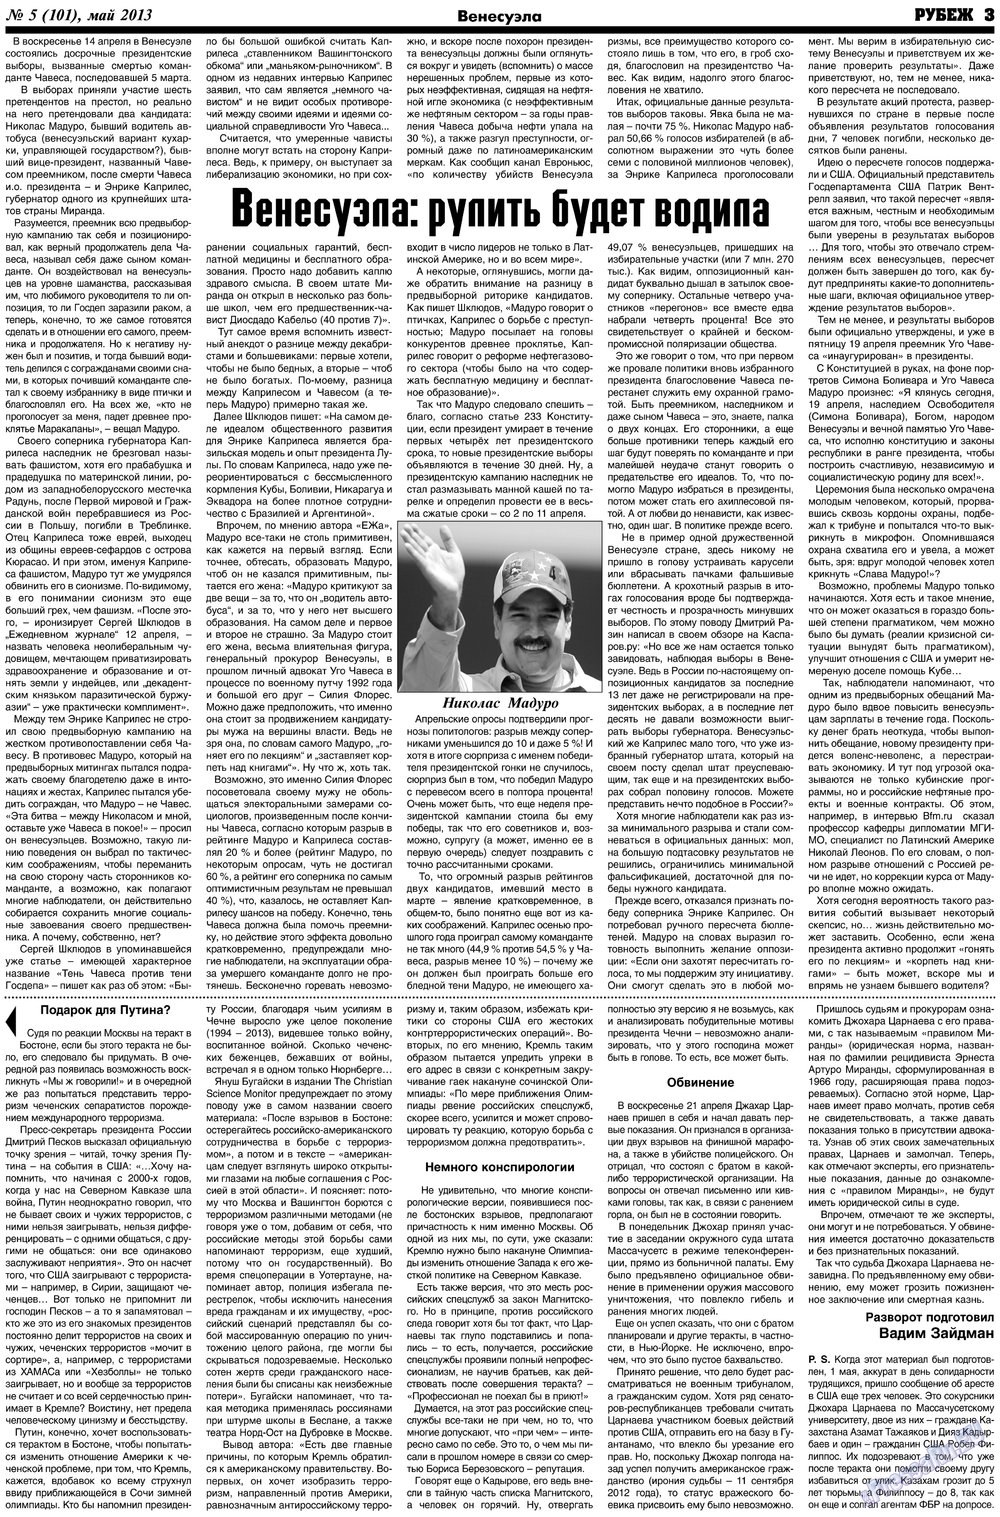 Рубеж, газета. 2013 №5 стр.3